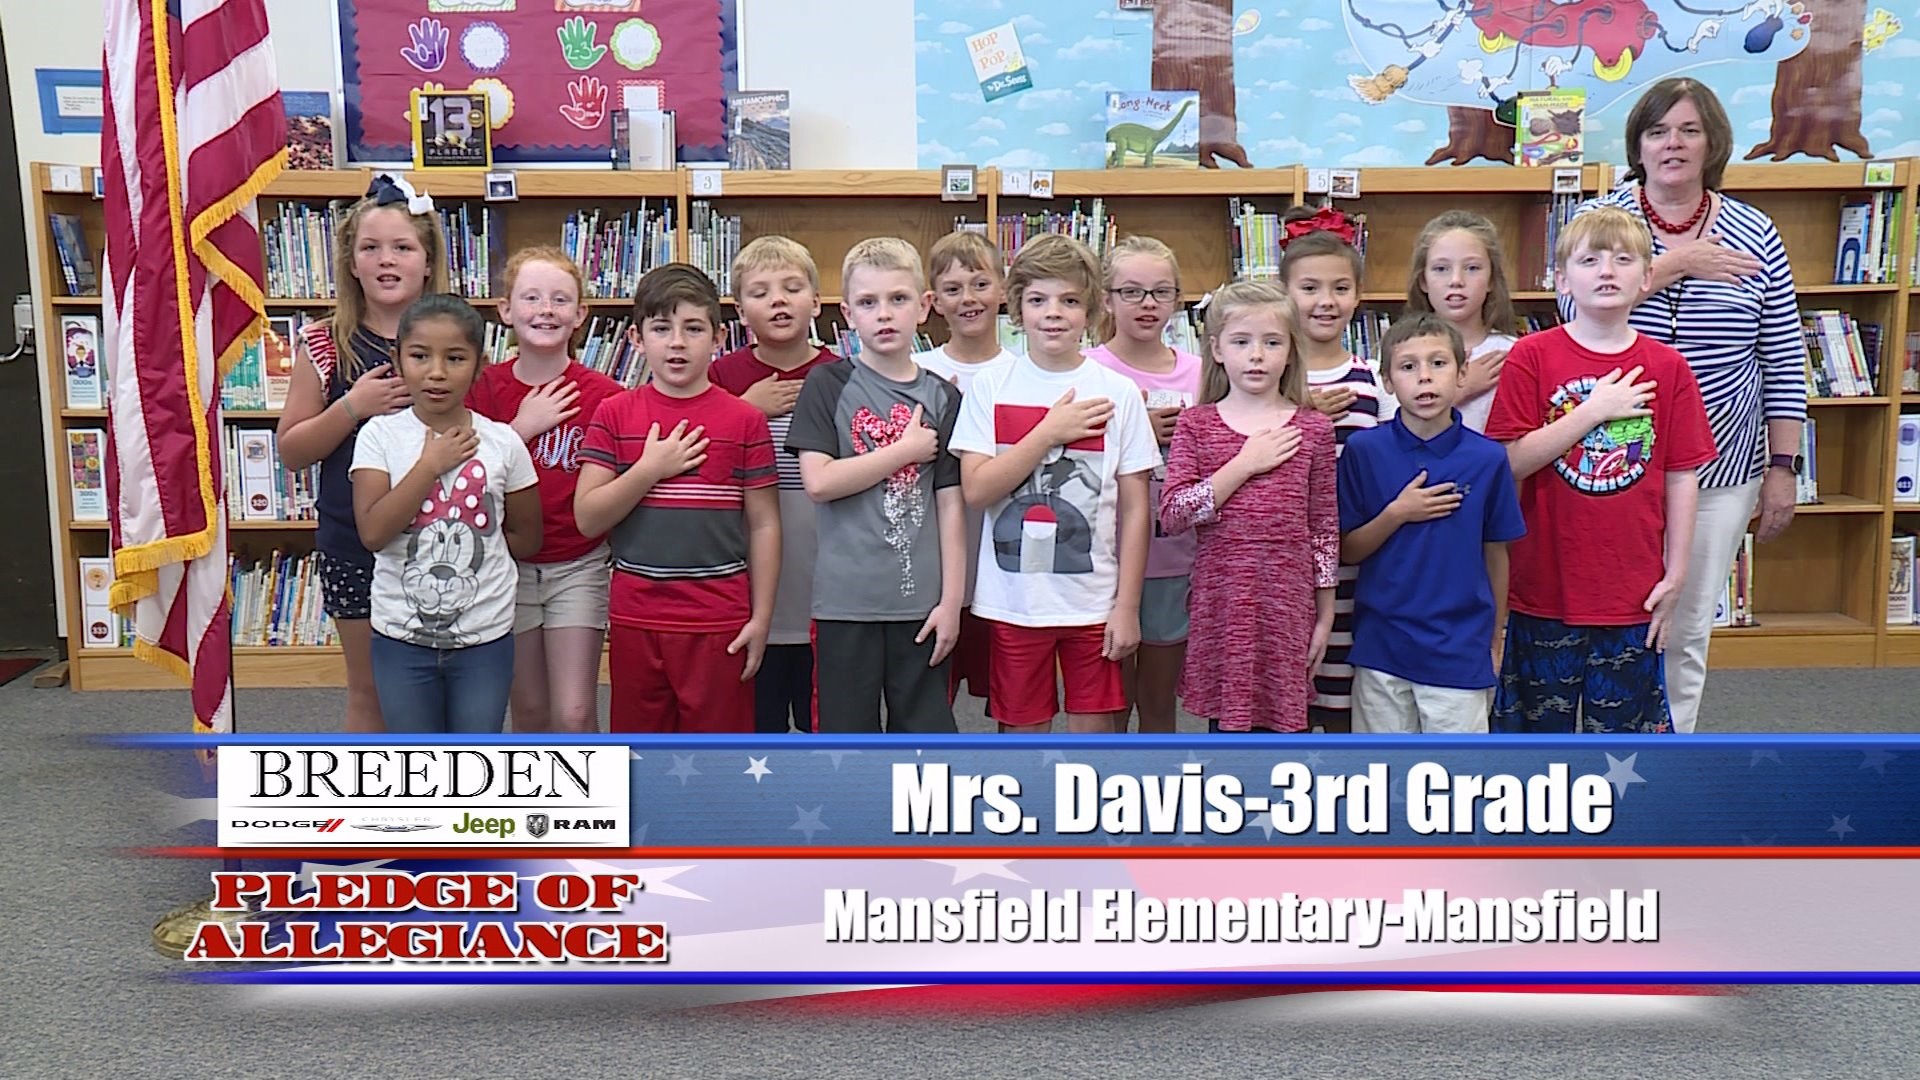 Mrs. Davis- 3rd Grade Mansfield Elementary, Mansfield